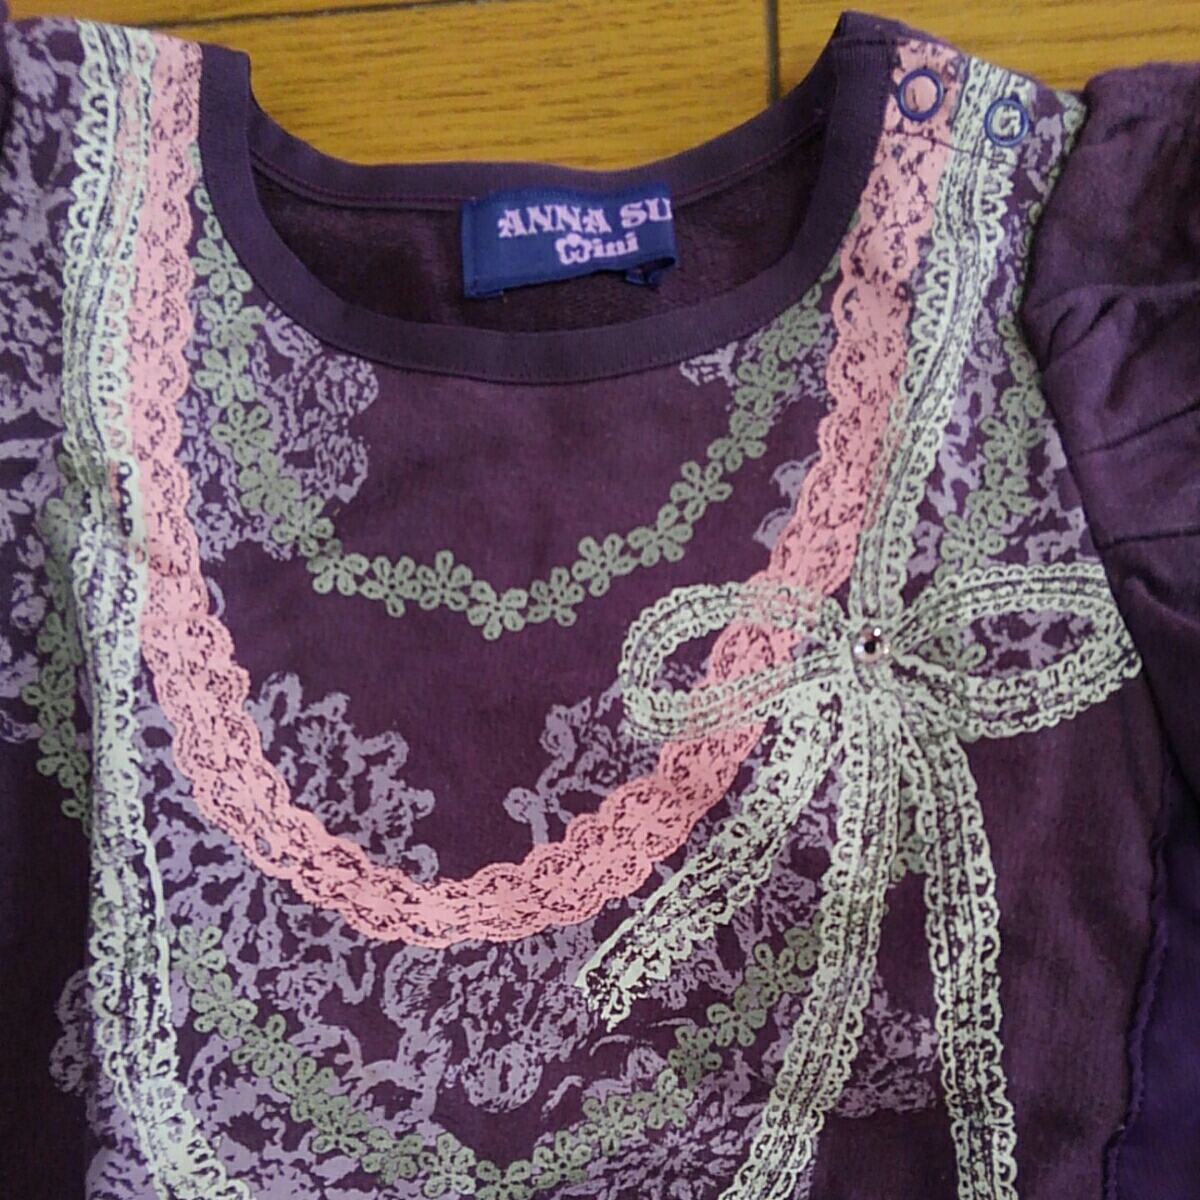 ANNA SUI mini Anna Sui Mini sweatshirt .... unusual material chiffon puff sleeve 90.